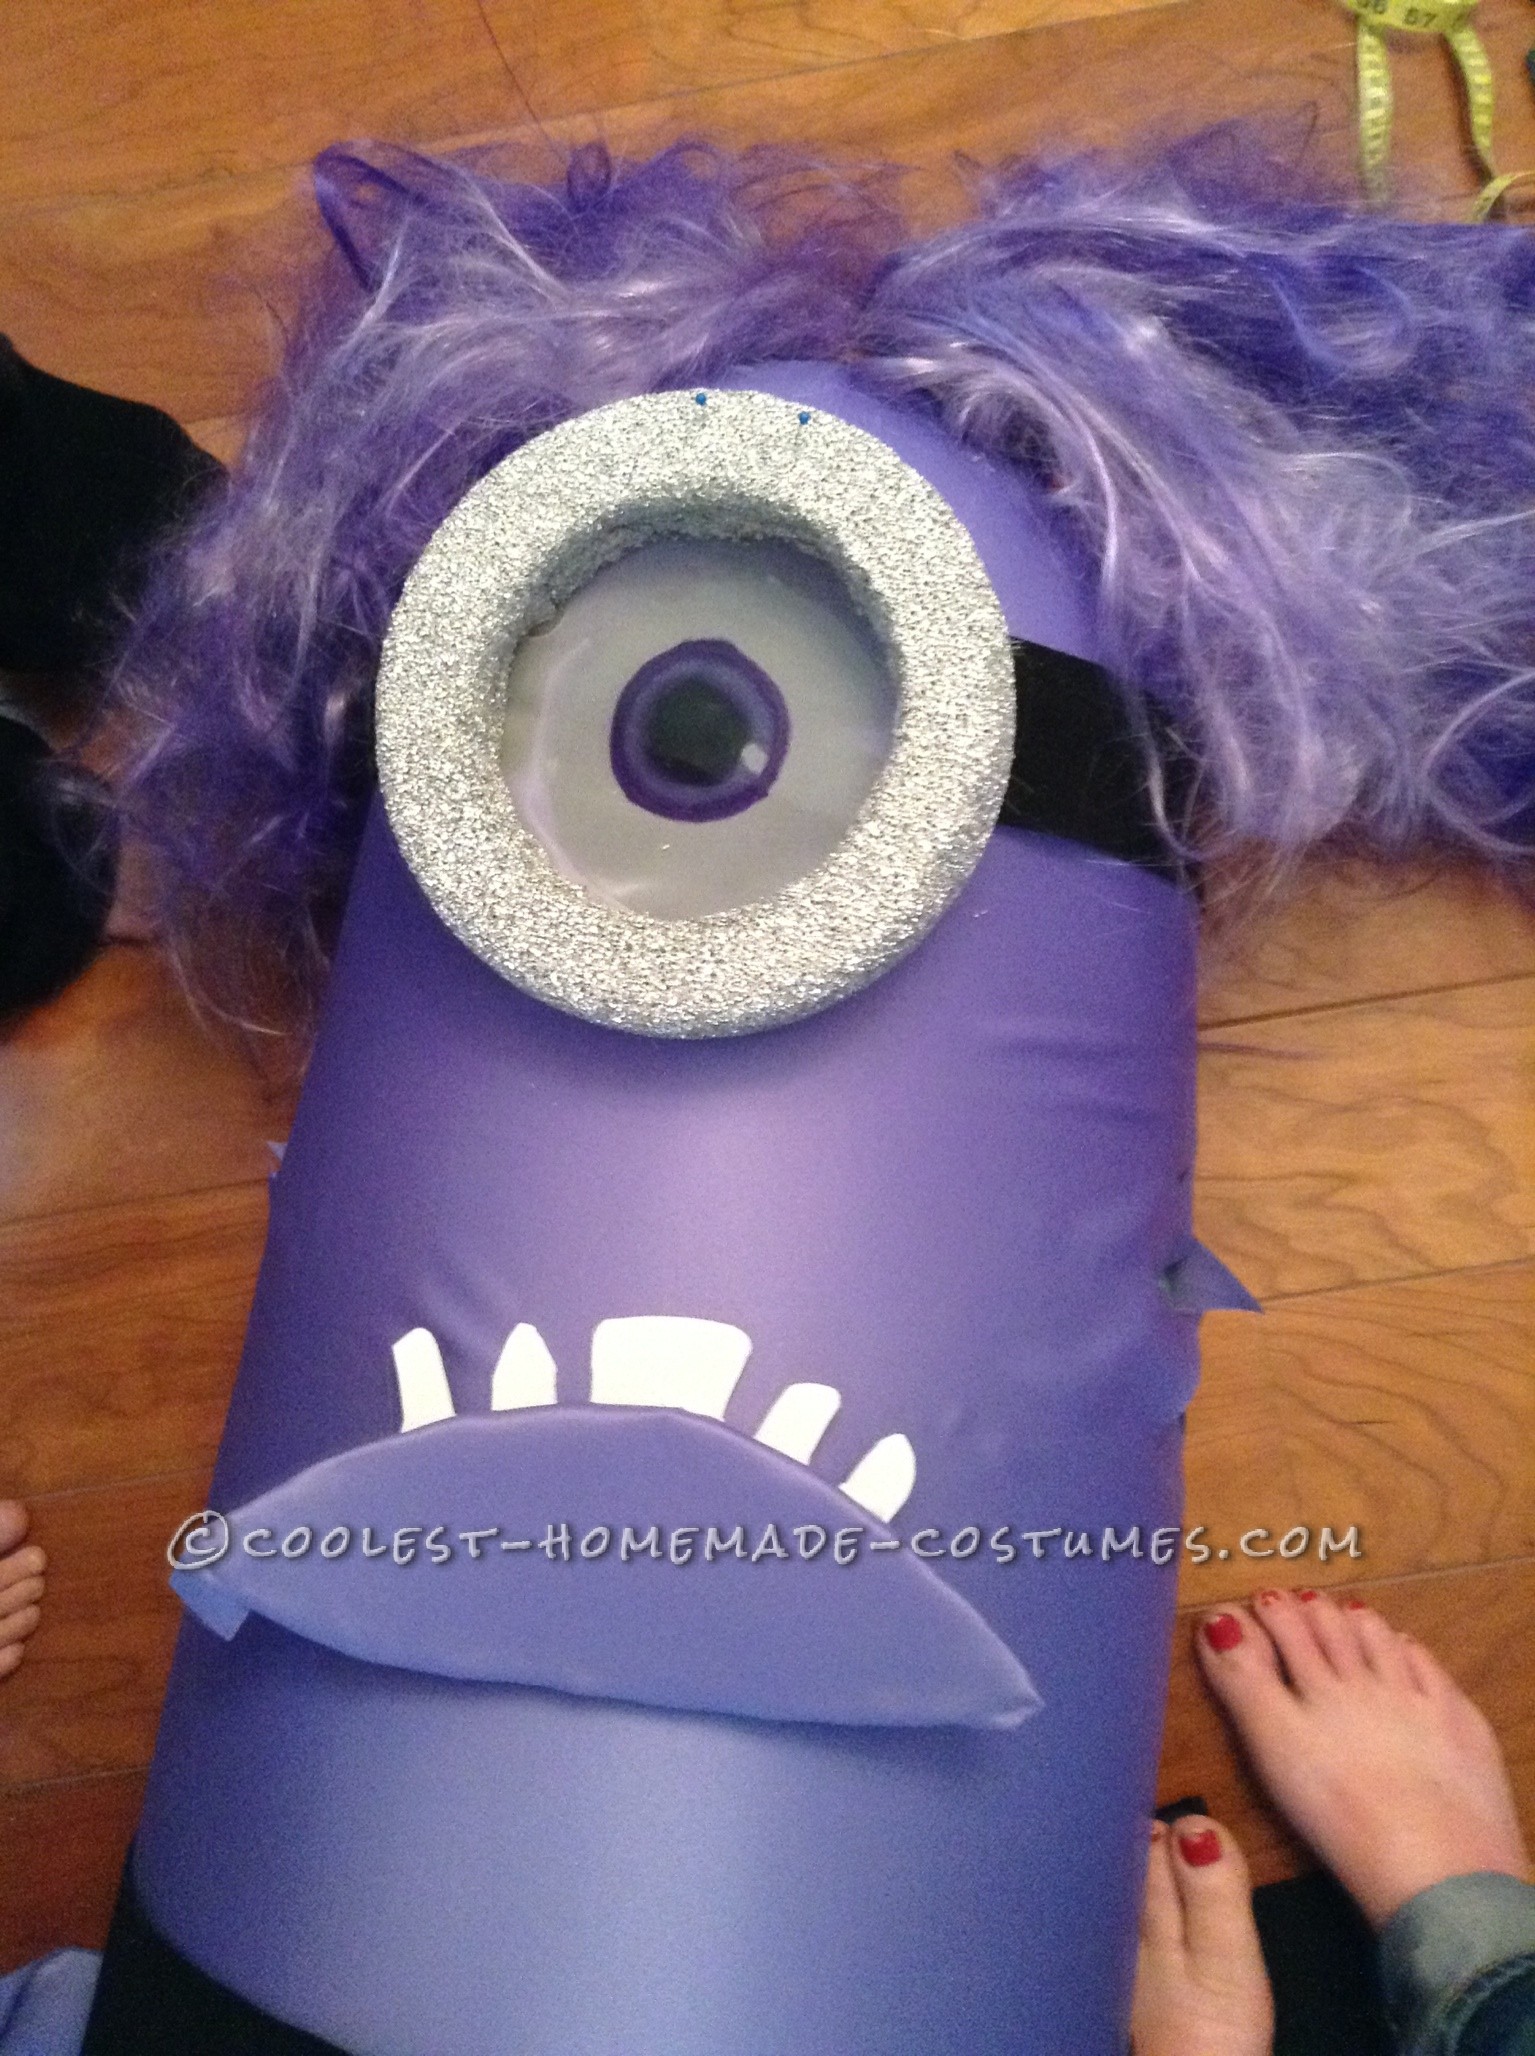 Make an Awesome Homemade Purple Minion Costume